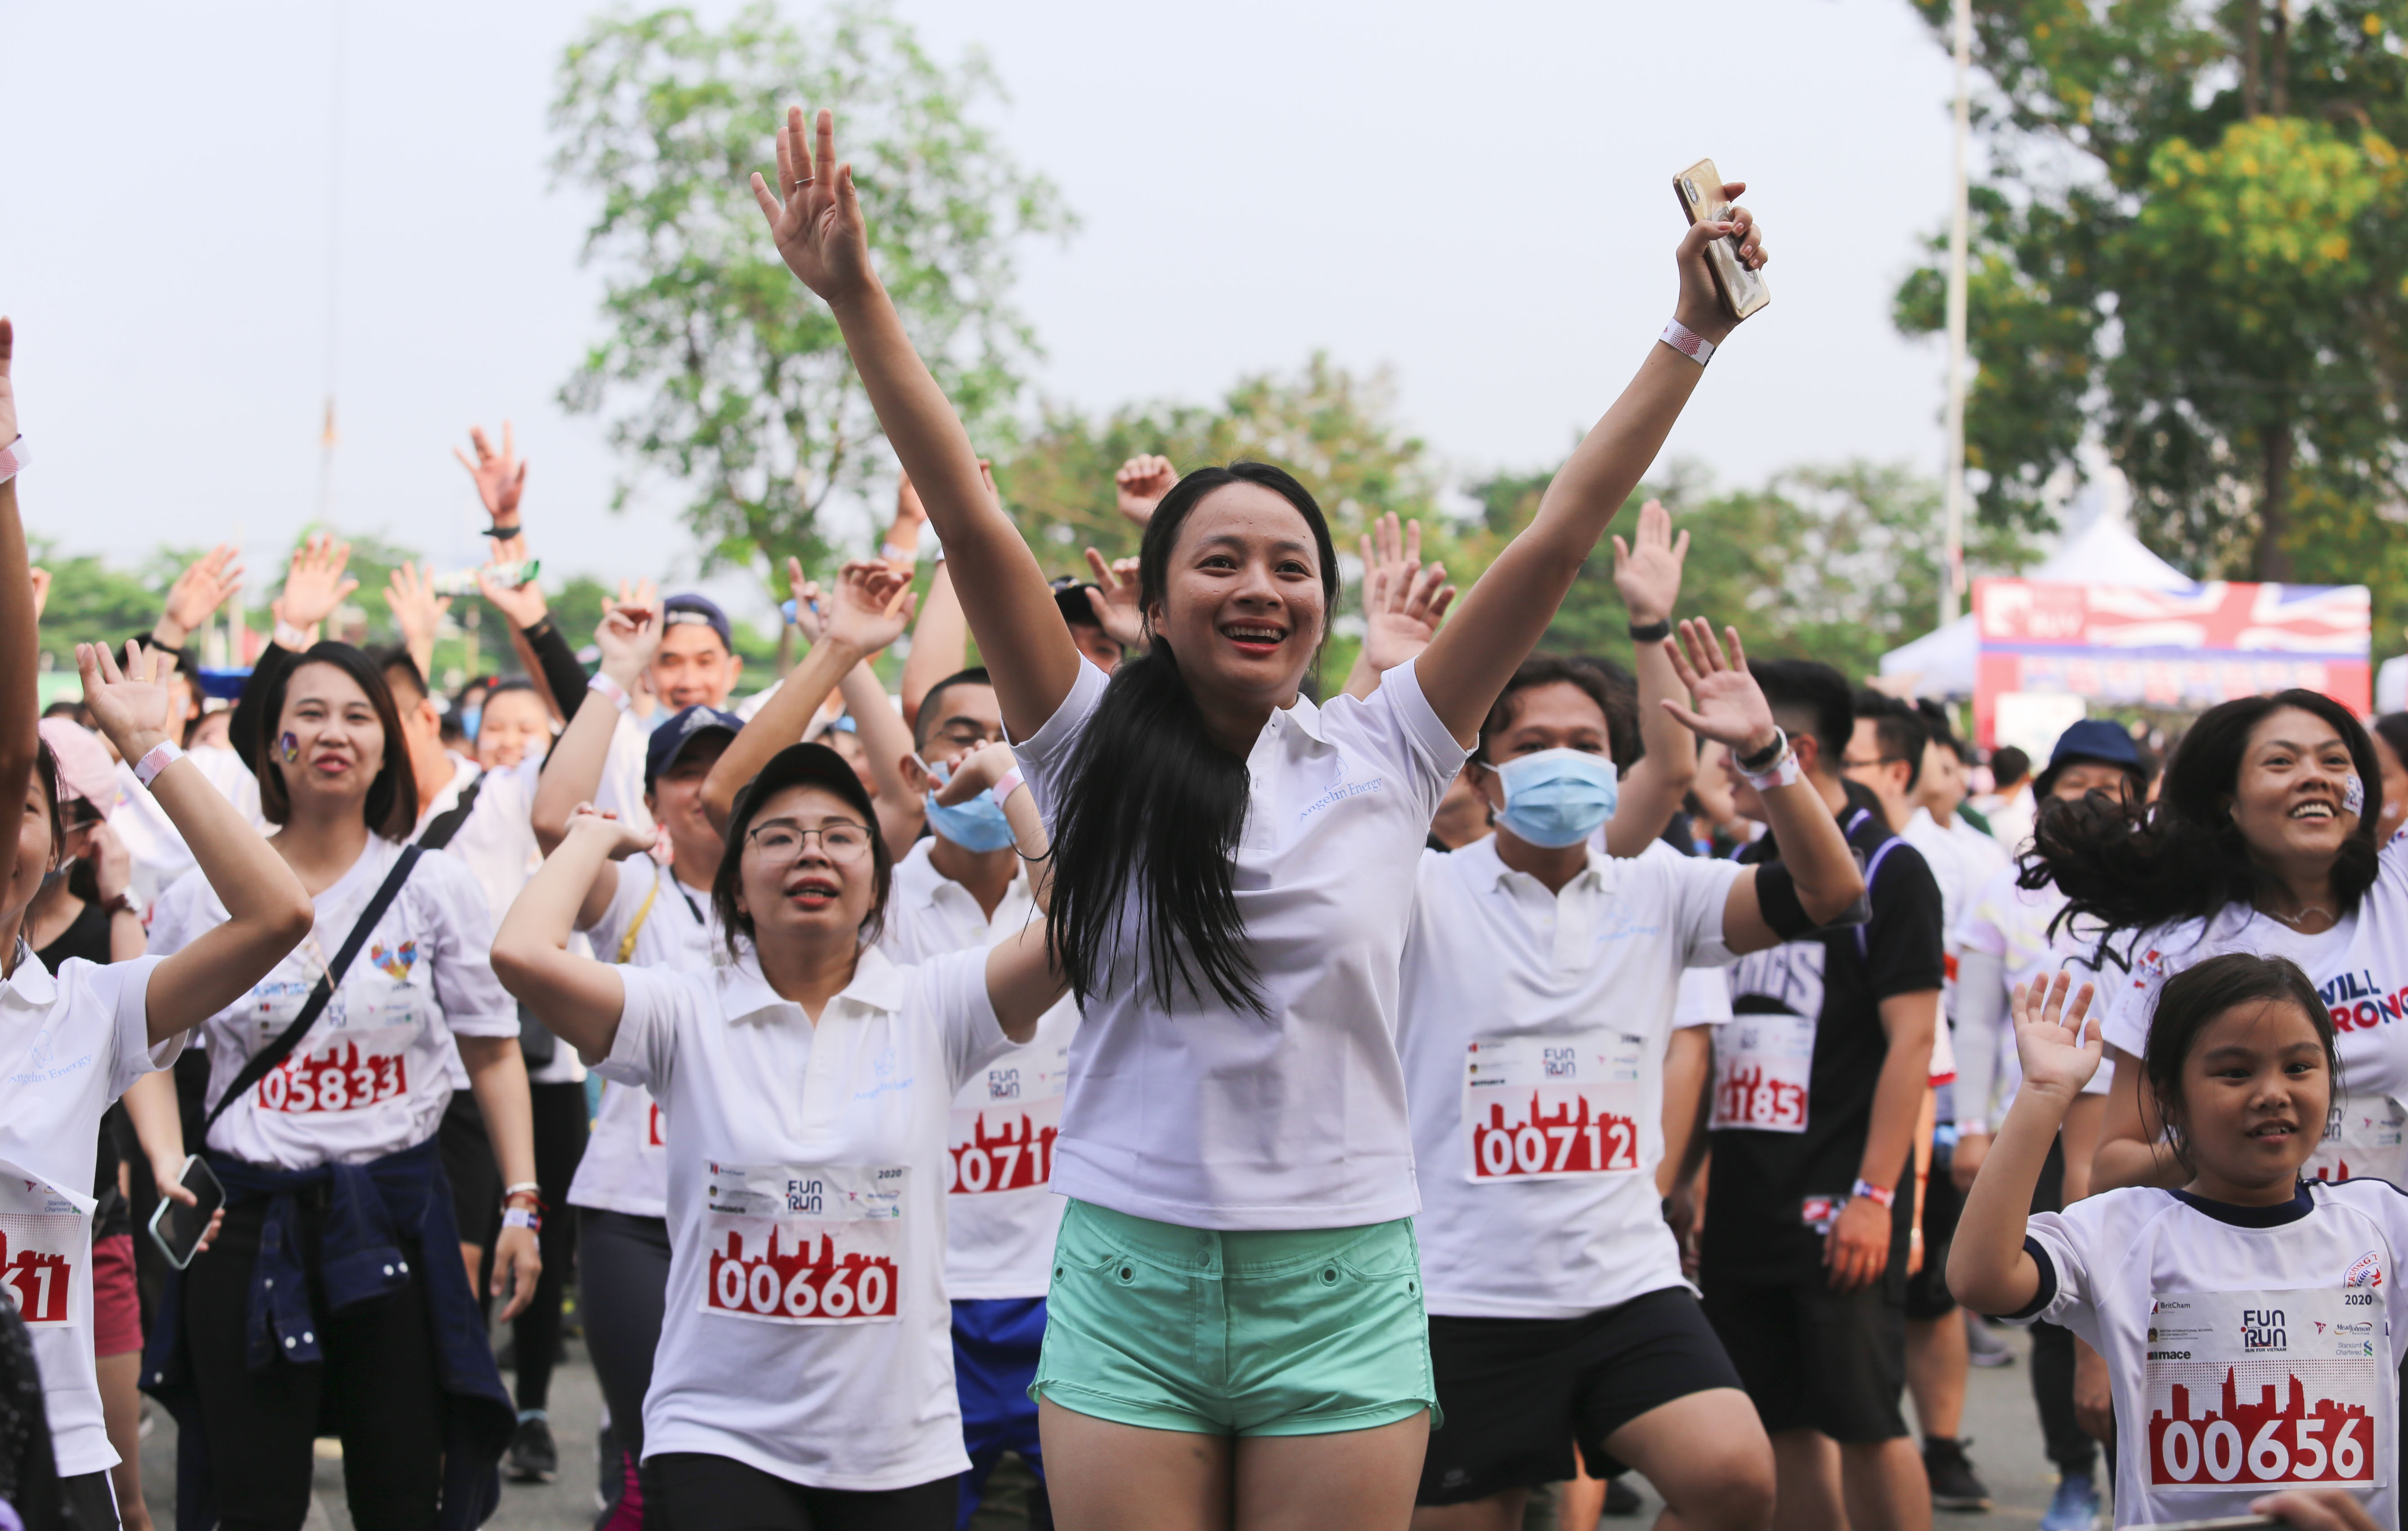 BritCham Fun Run raises $47,600 to help needy people in Vietnam